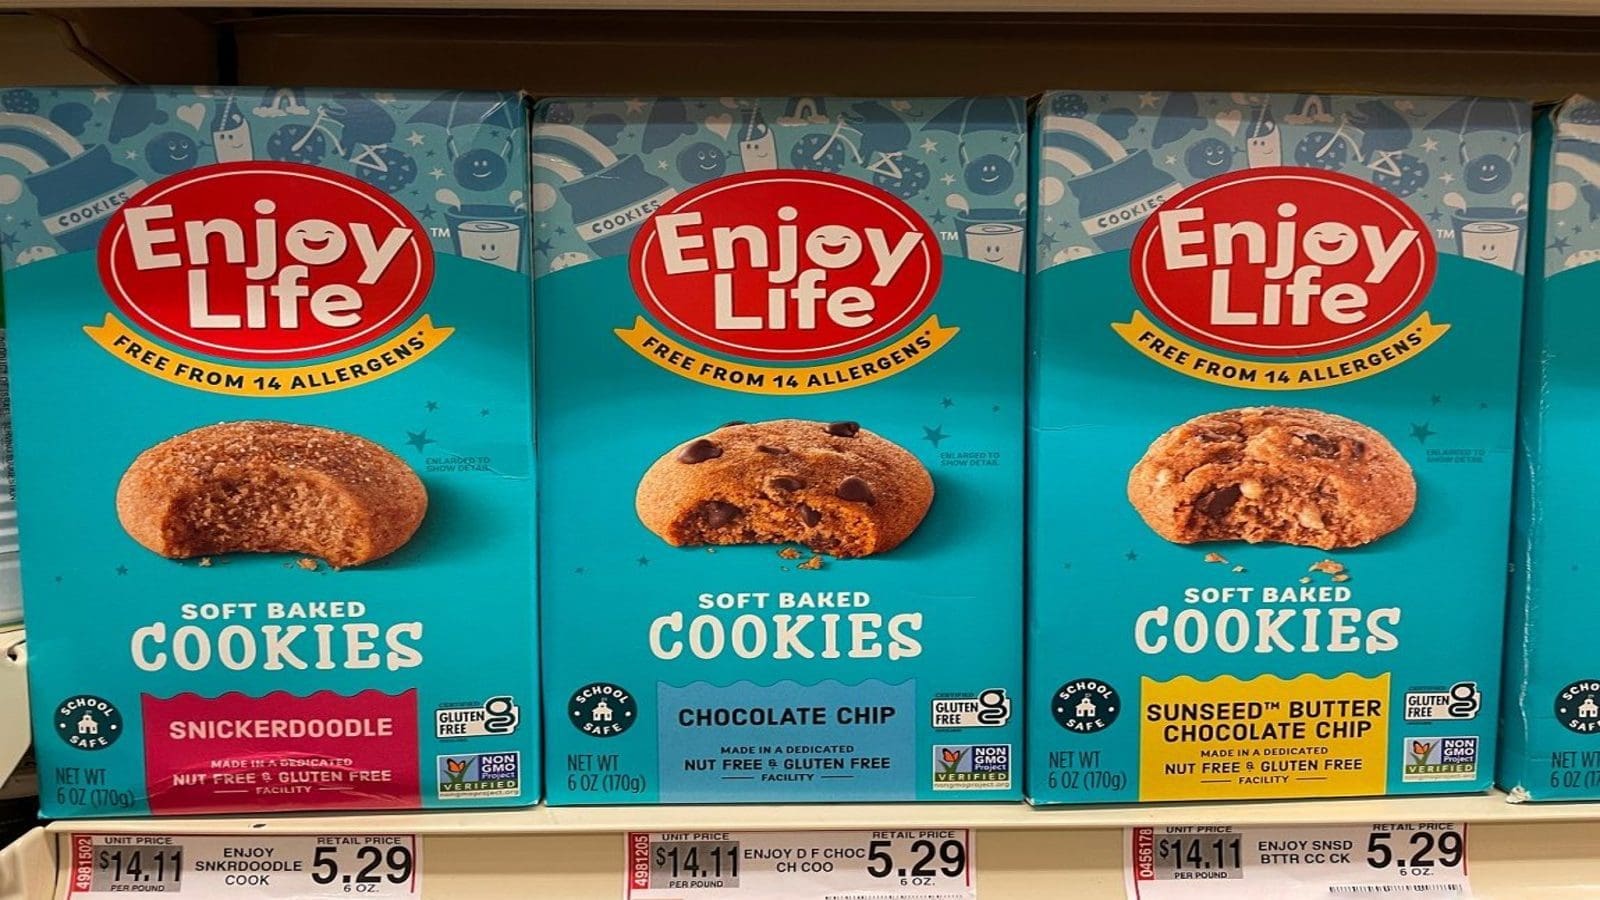 Mondelez to close ‘Enjoy Life Foods’ brand factory in USA putting 105 jobs at stake